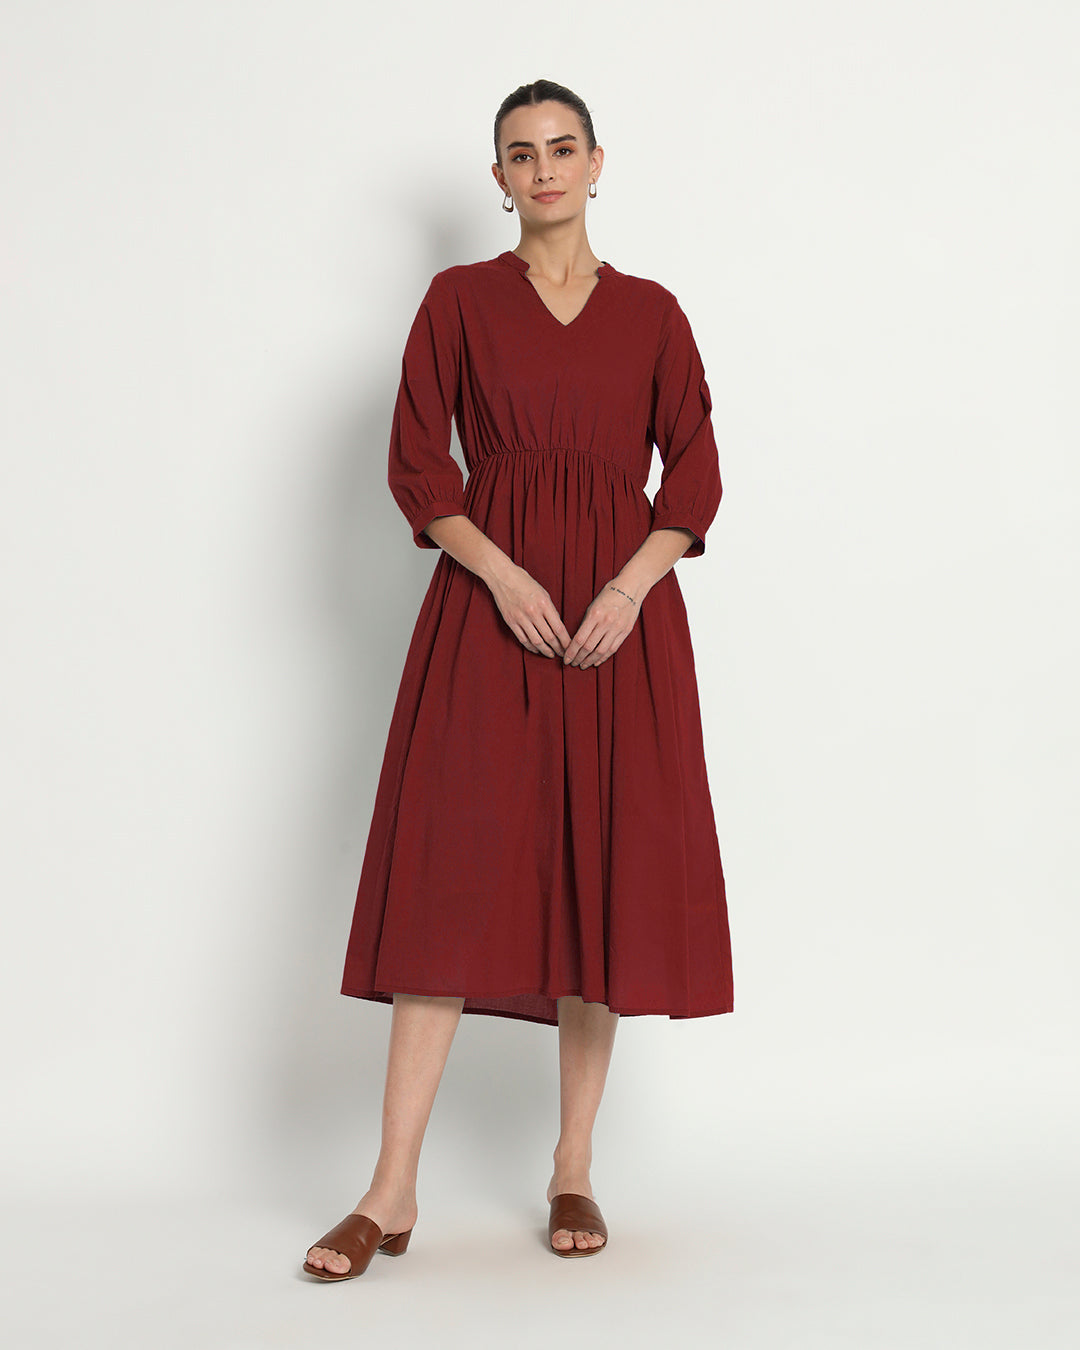 Russet Red Gathered V-Neck Stretch Dress